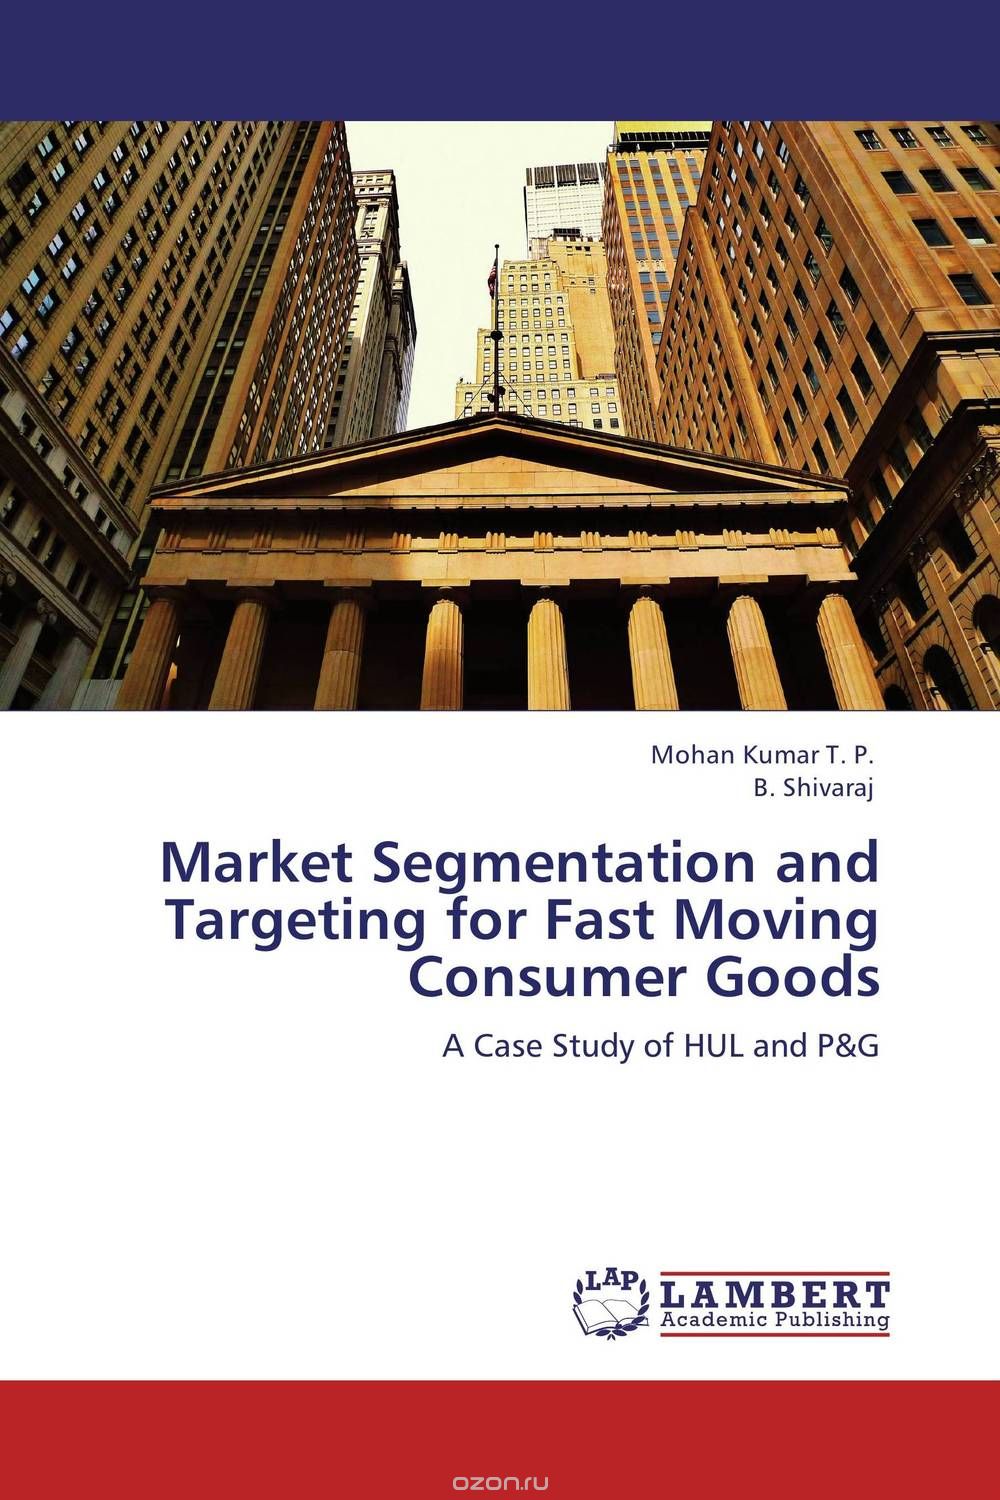 Скачать книгу "Market Segmentation and Targeting for Fast Moving Consumer Goods"